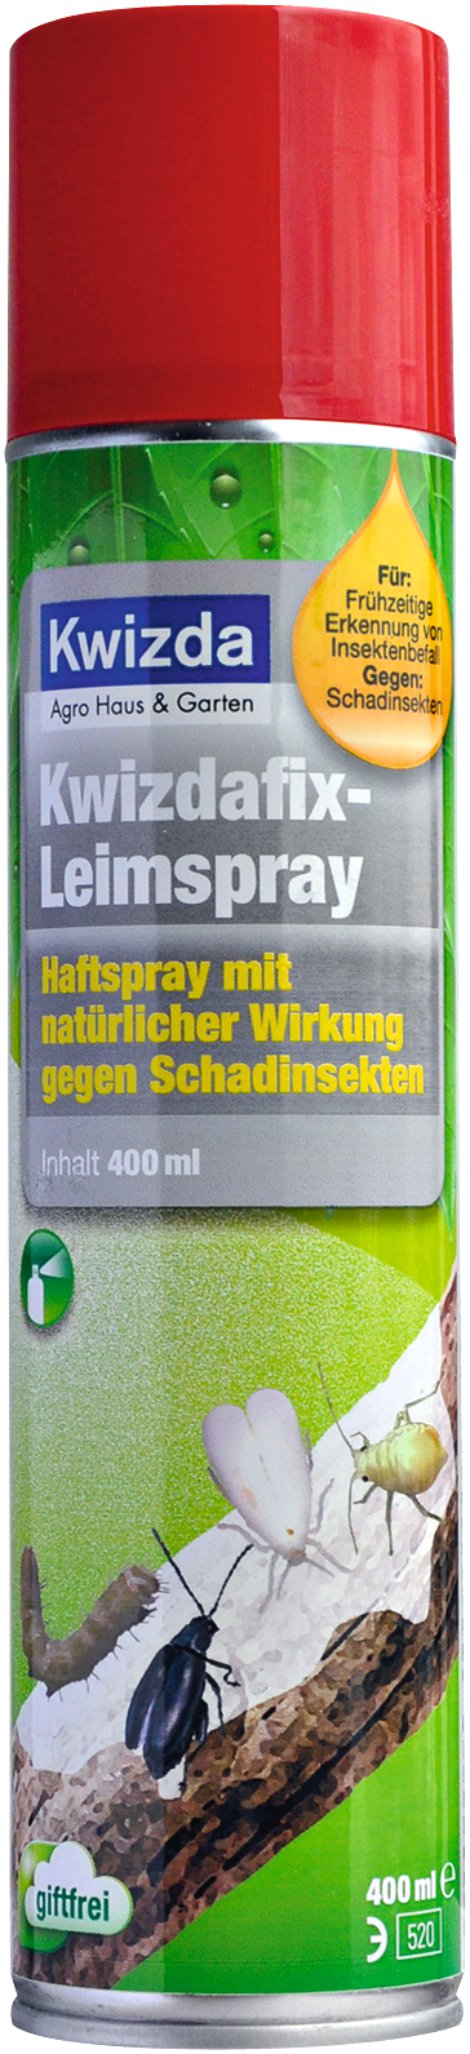 KWIZDA Insekten Leimspray Fix 400 ml